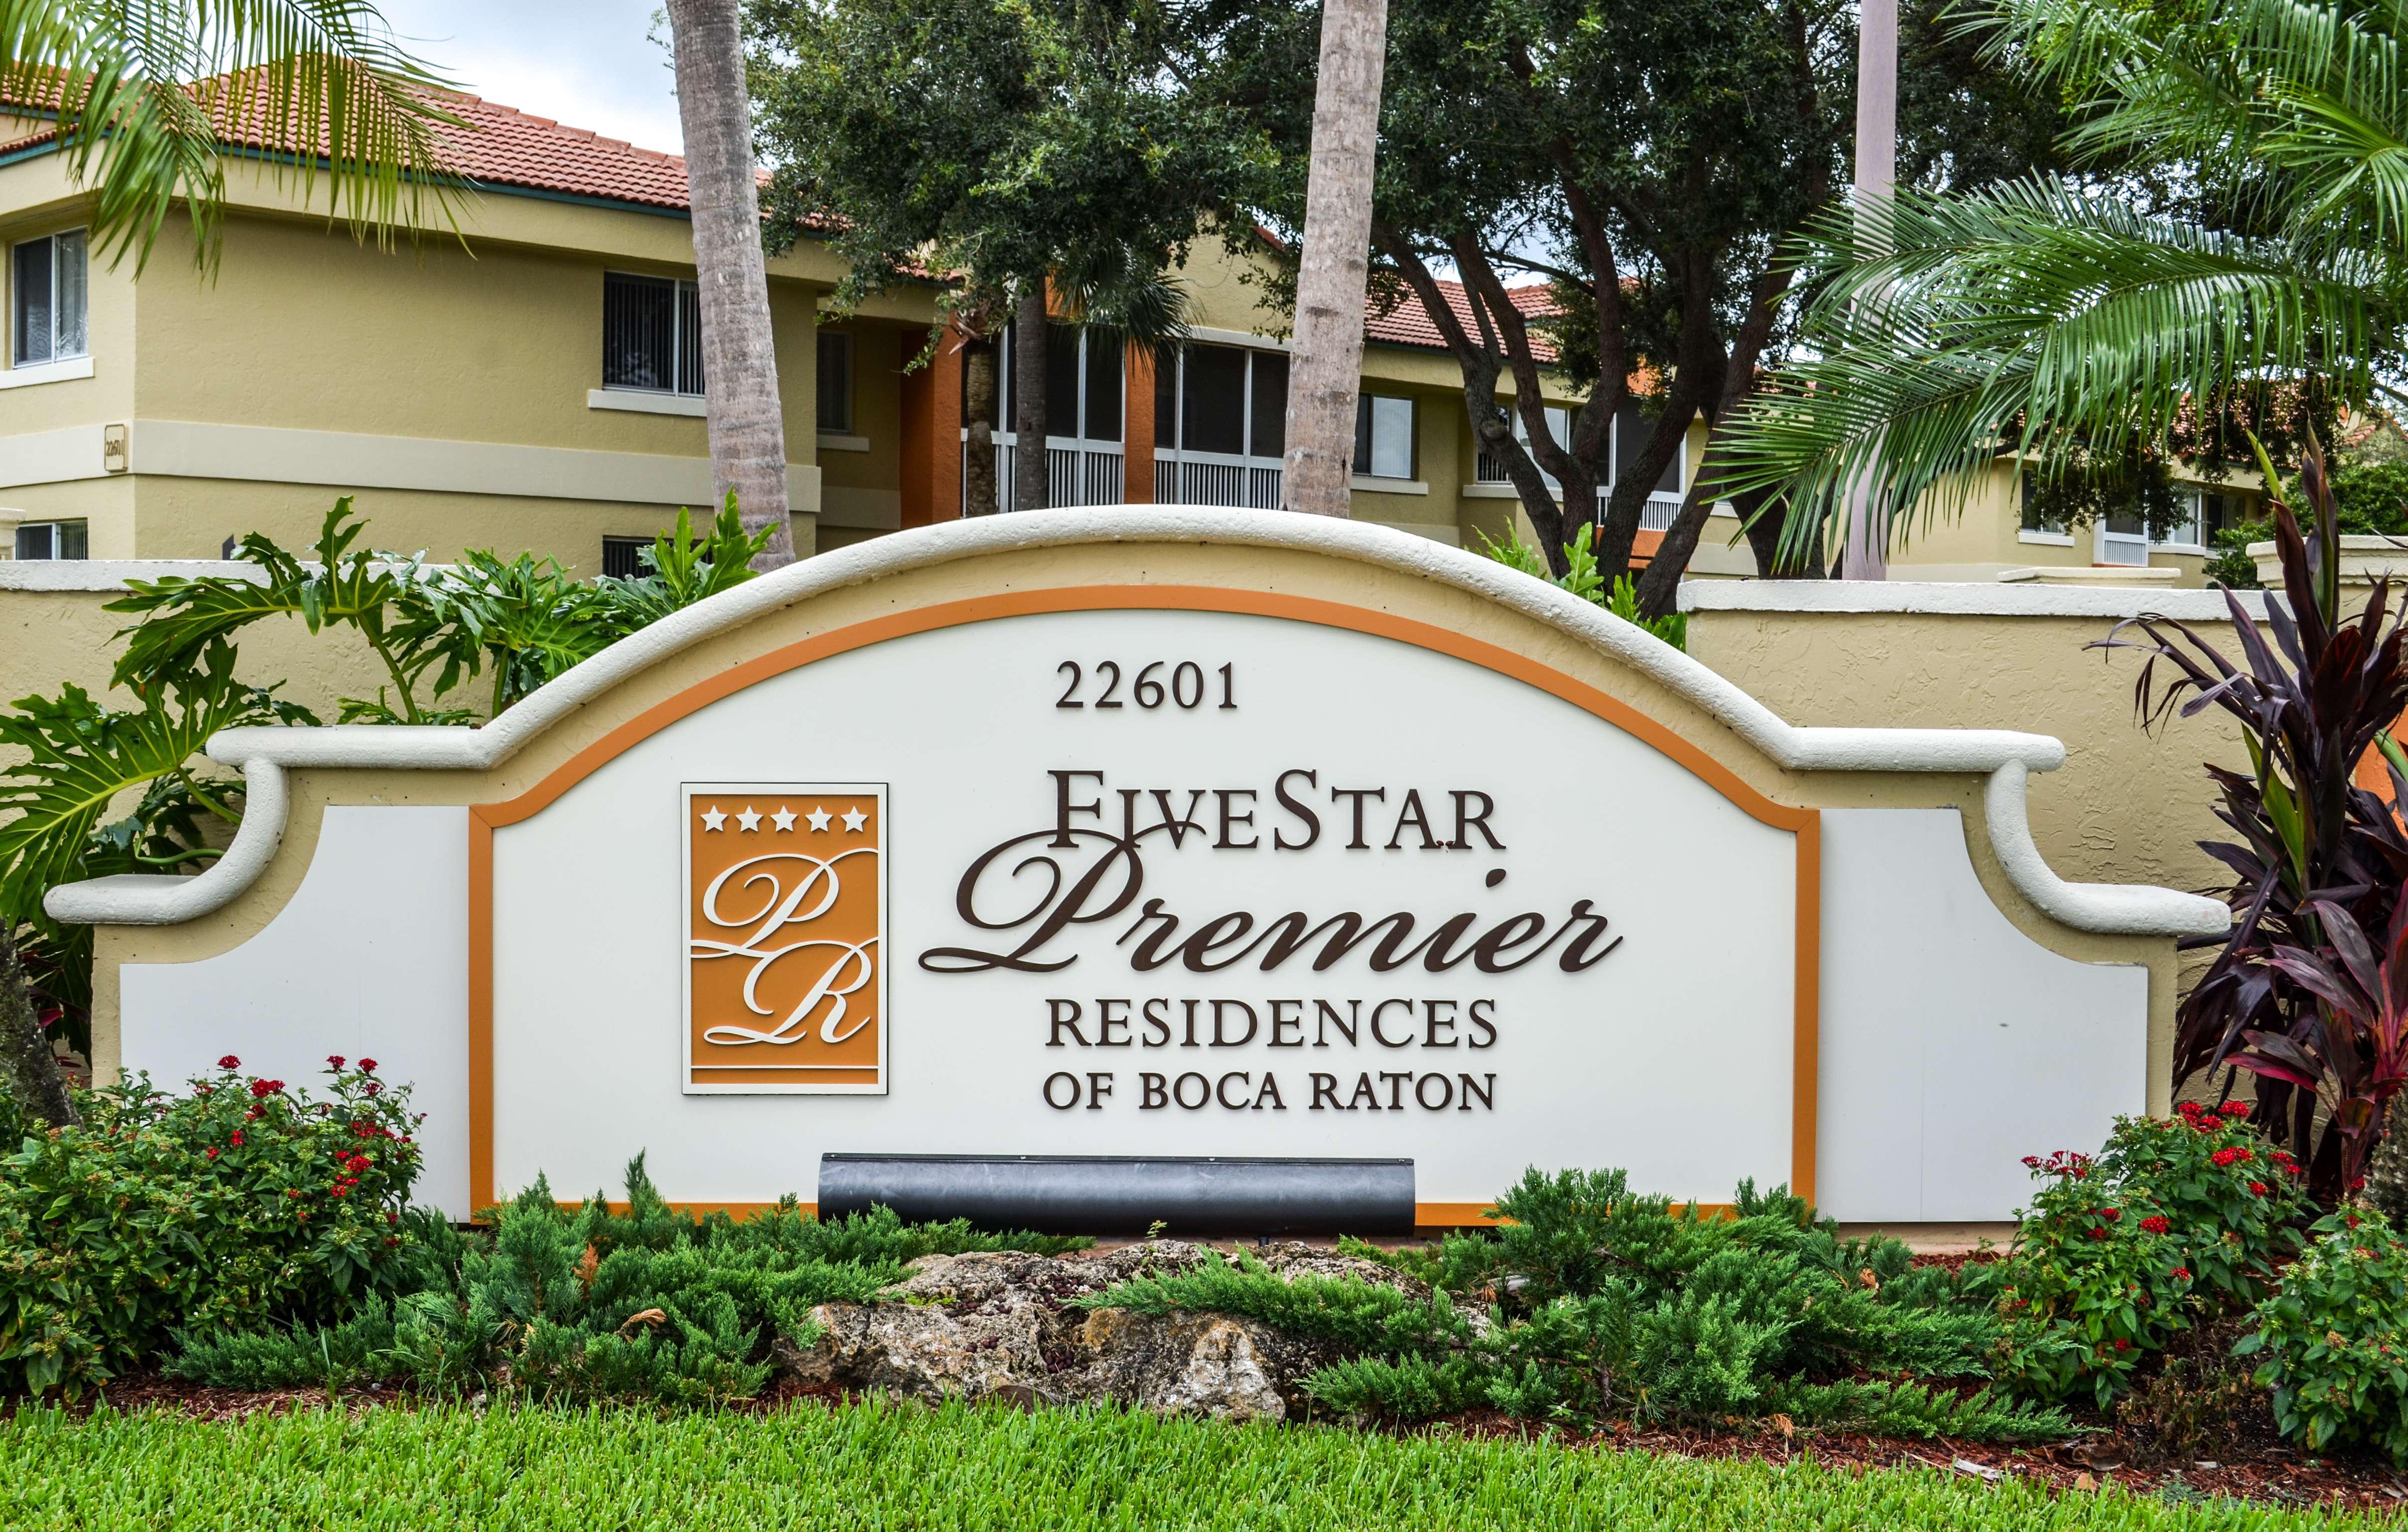 Five Star Premier Residences of Boca Raton front sign